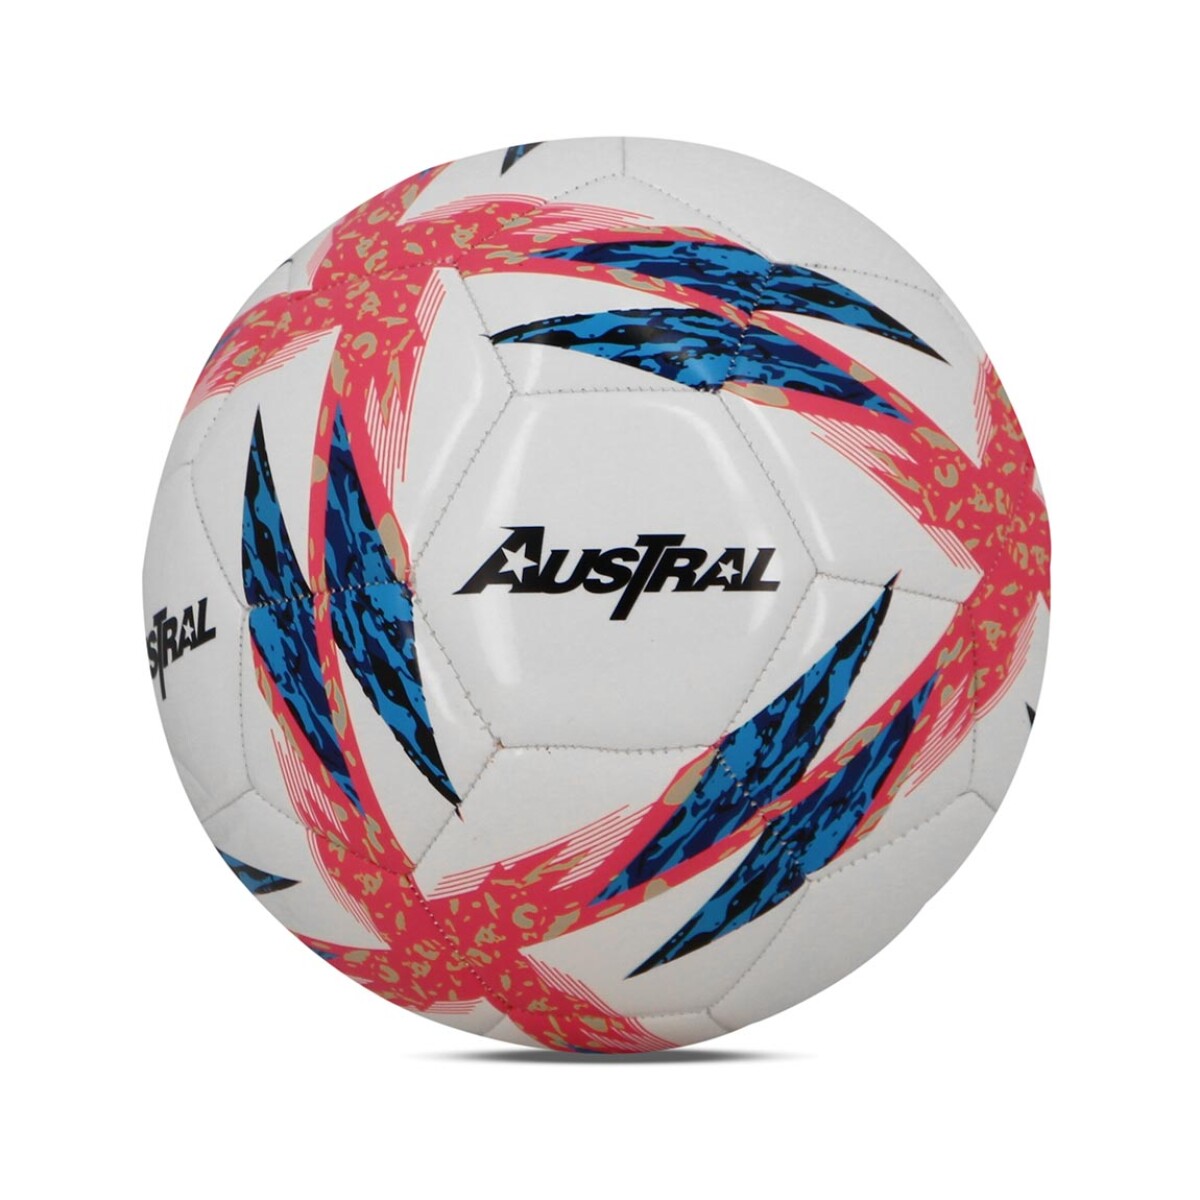 Austral Pelota Futbol Cancha Ball Star - Blanco-rosado 